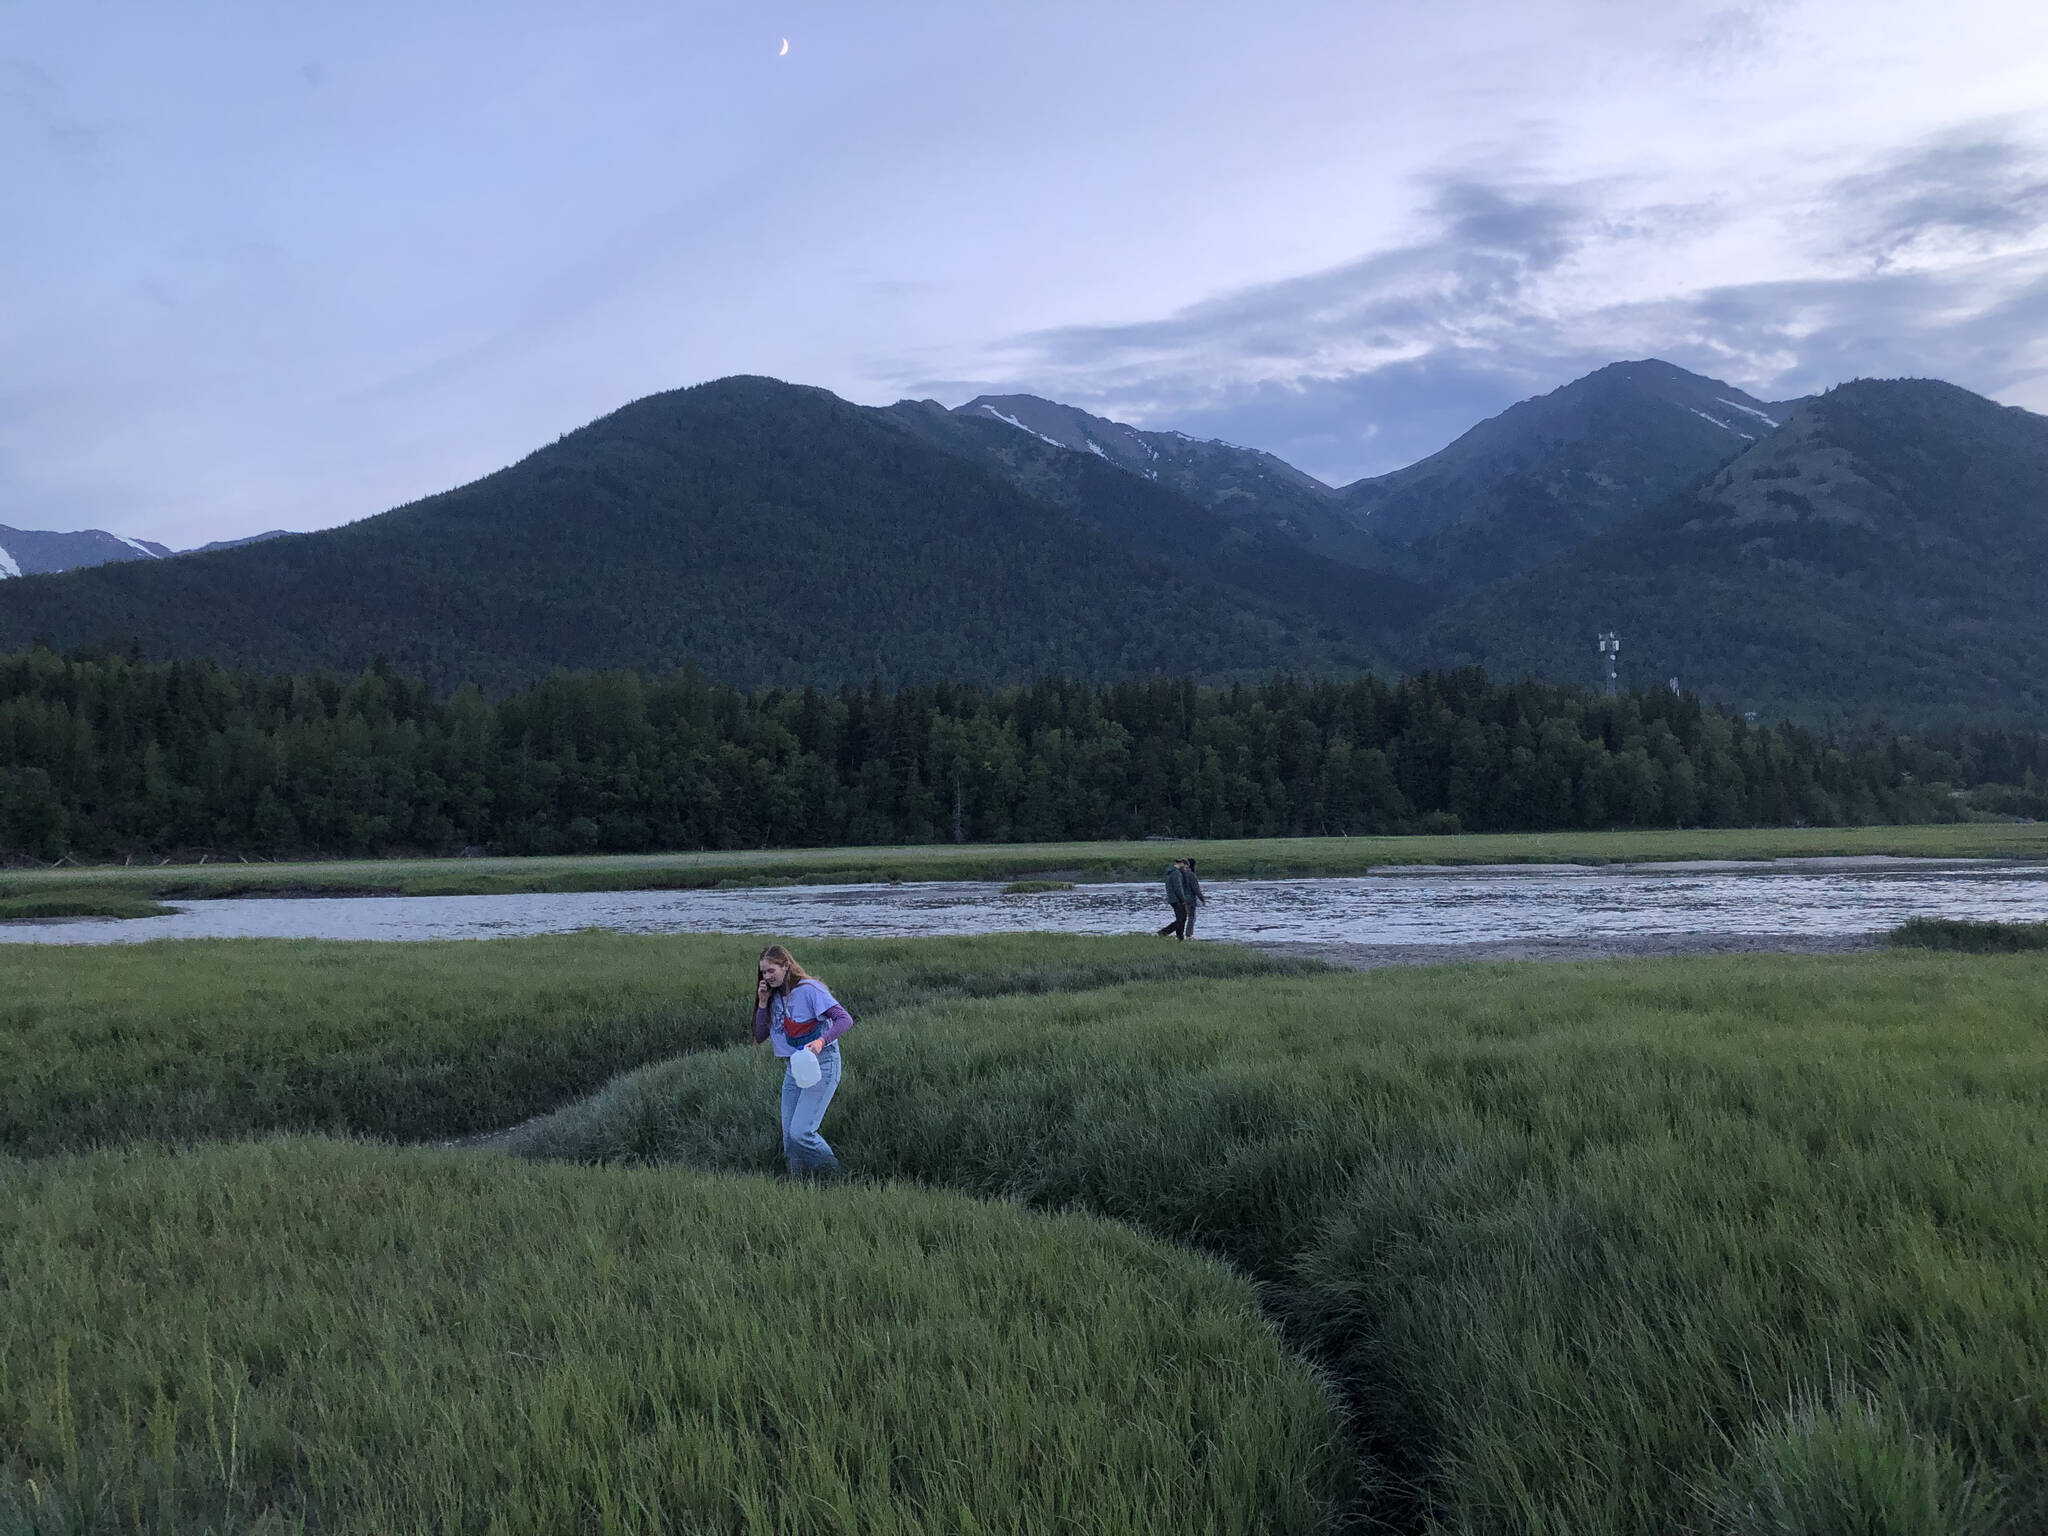 Walking near the mudflats in Hope, Alaska, on Saturday, June 4, 2022. (Courtesy Sabine Poux)